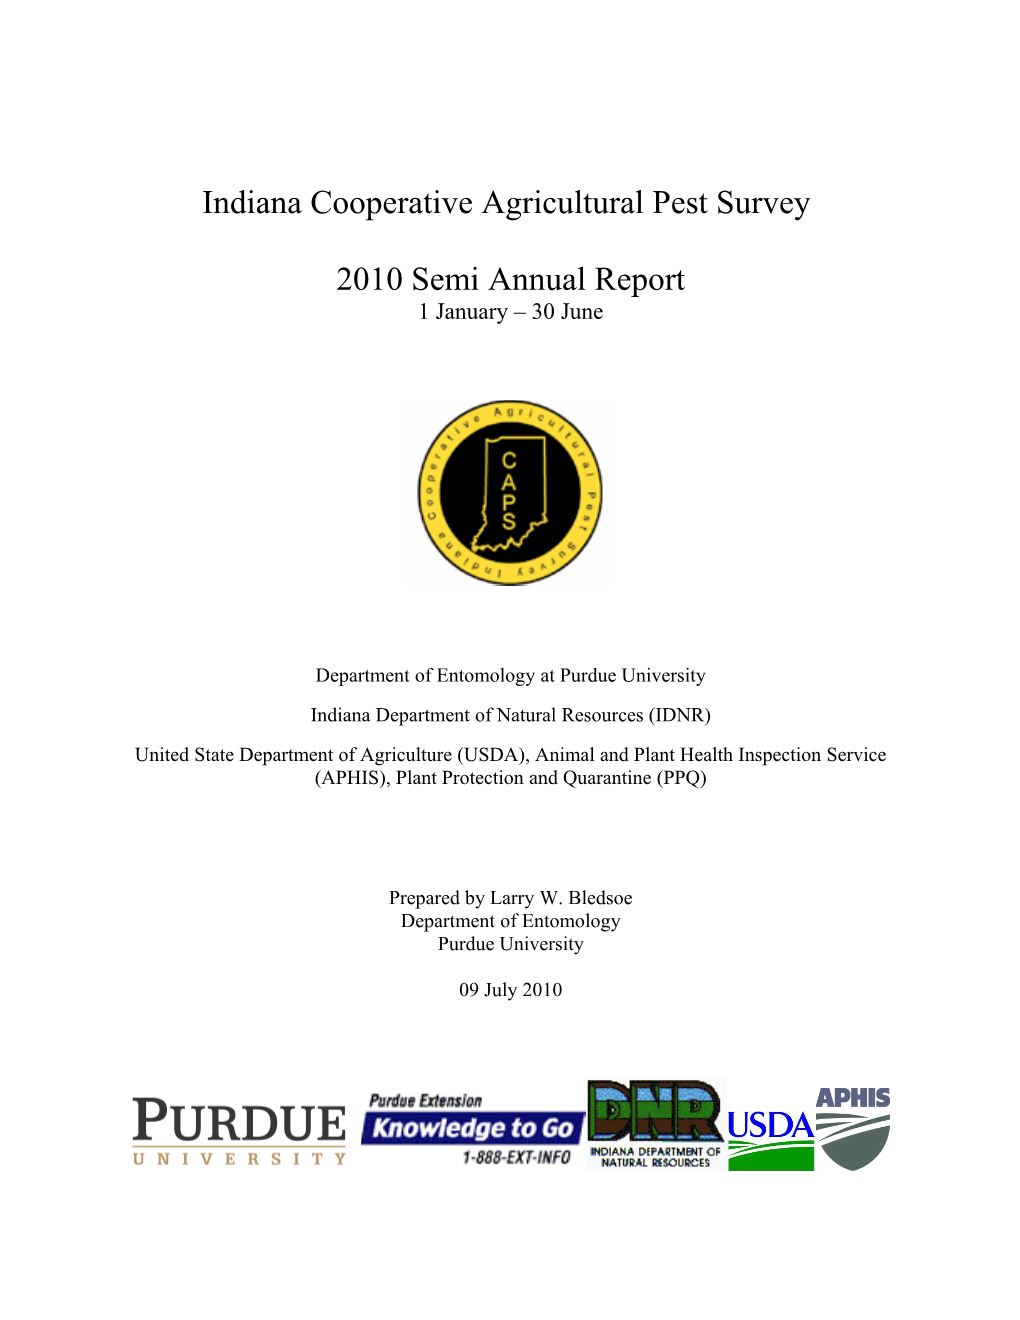 Indiana CAPS SSC Semi Annual Report, 09 July 2010